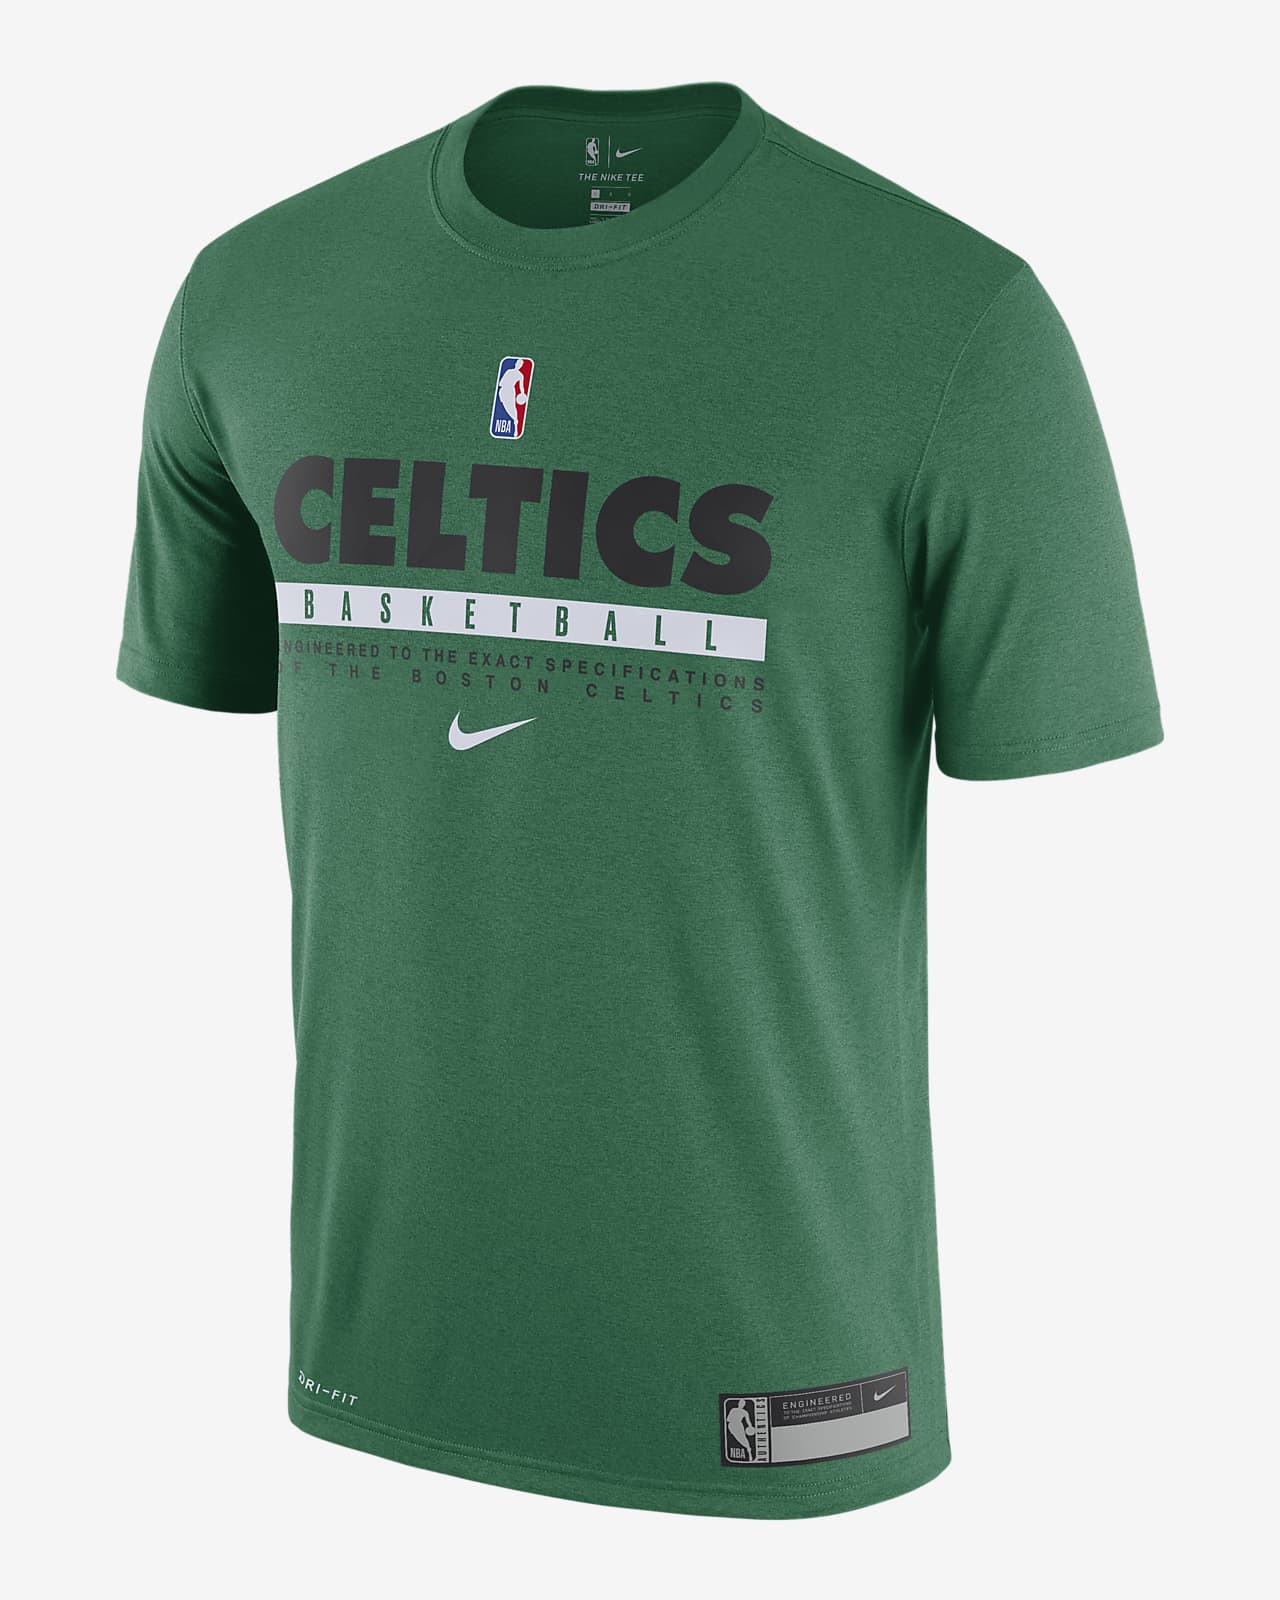 Celtics Practice Nike Dri-FIT NBA-T 